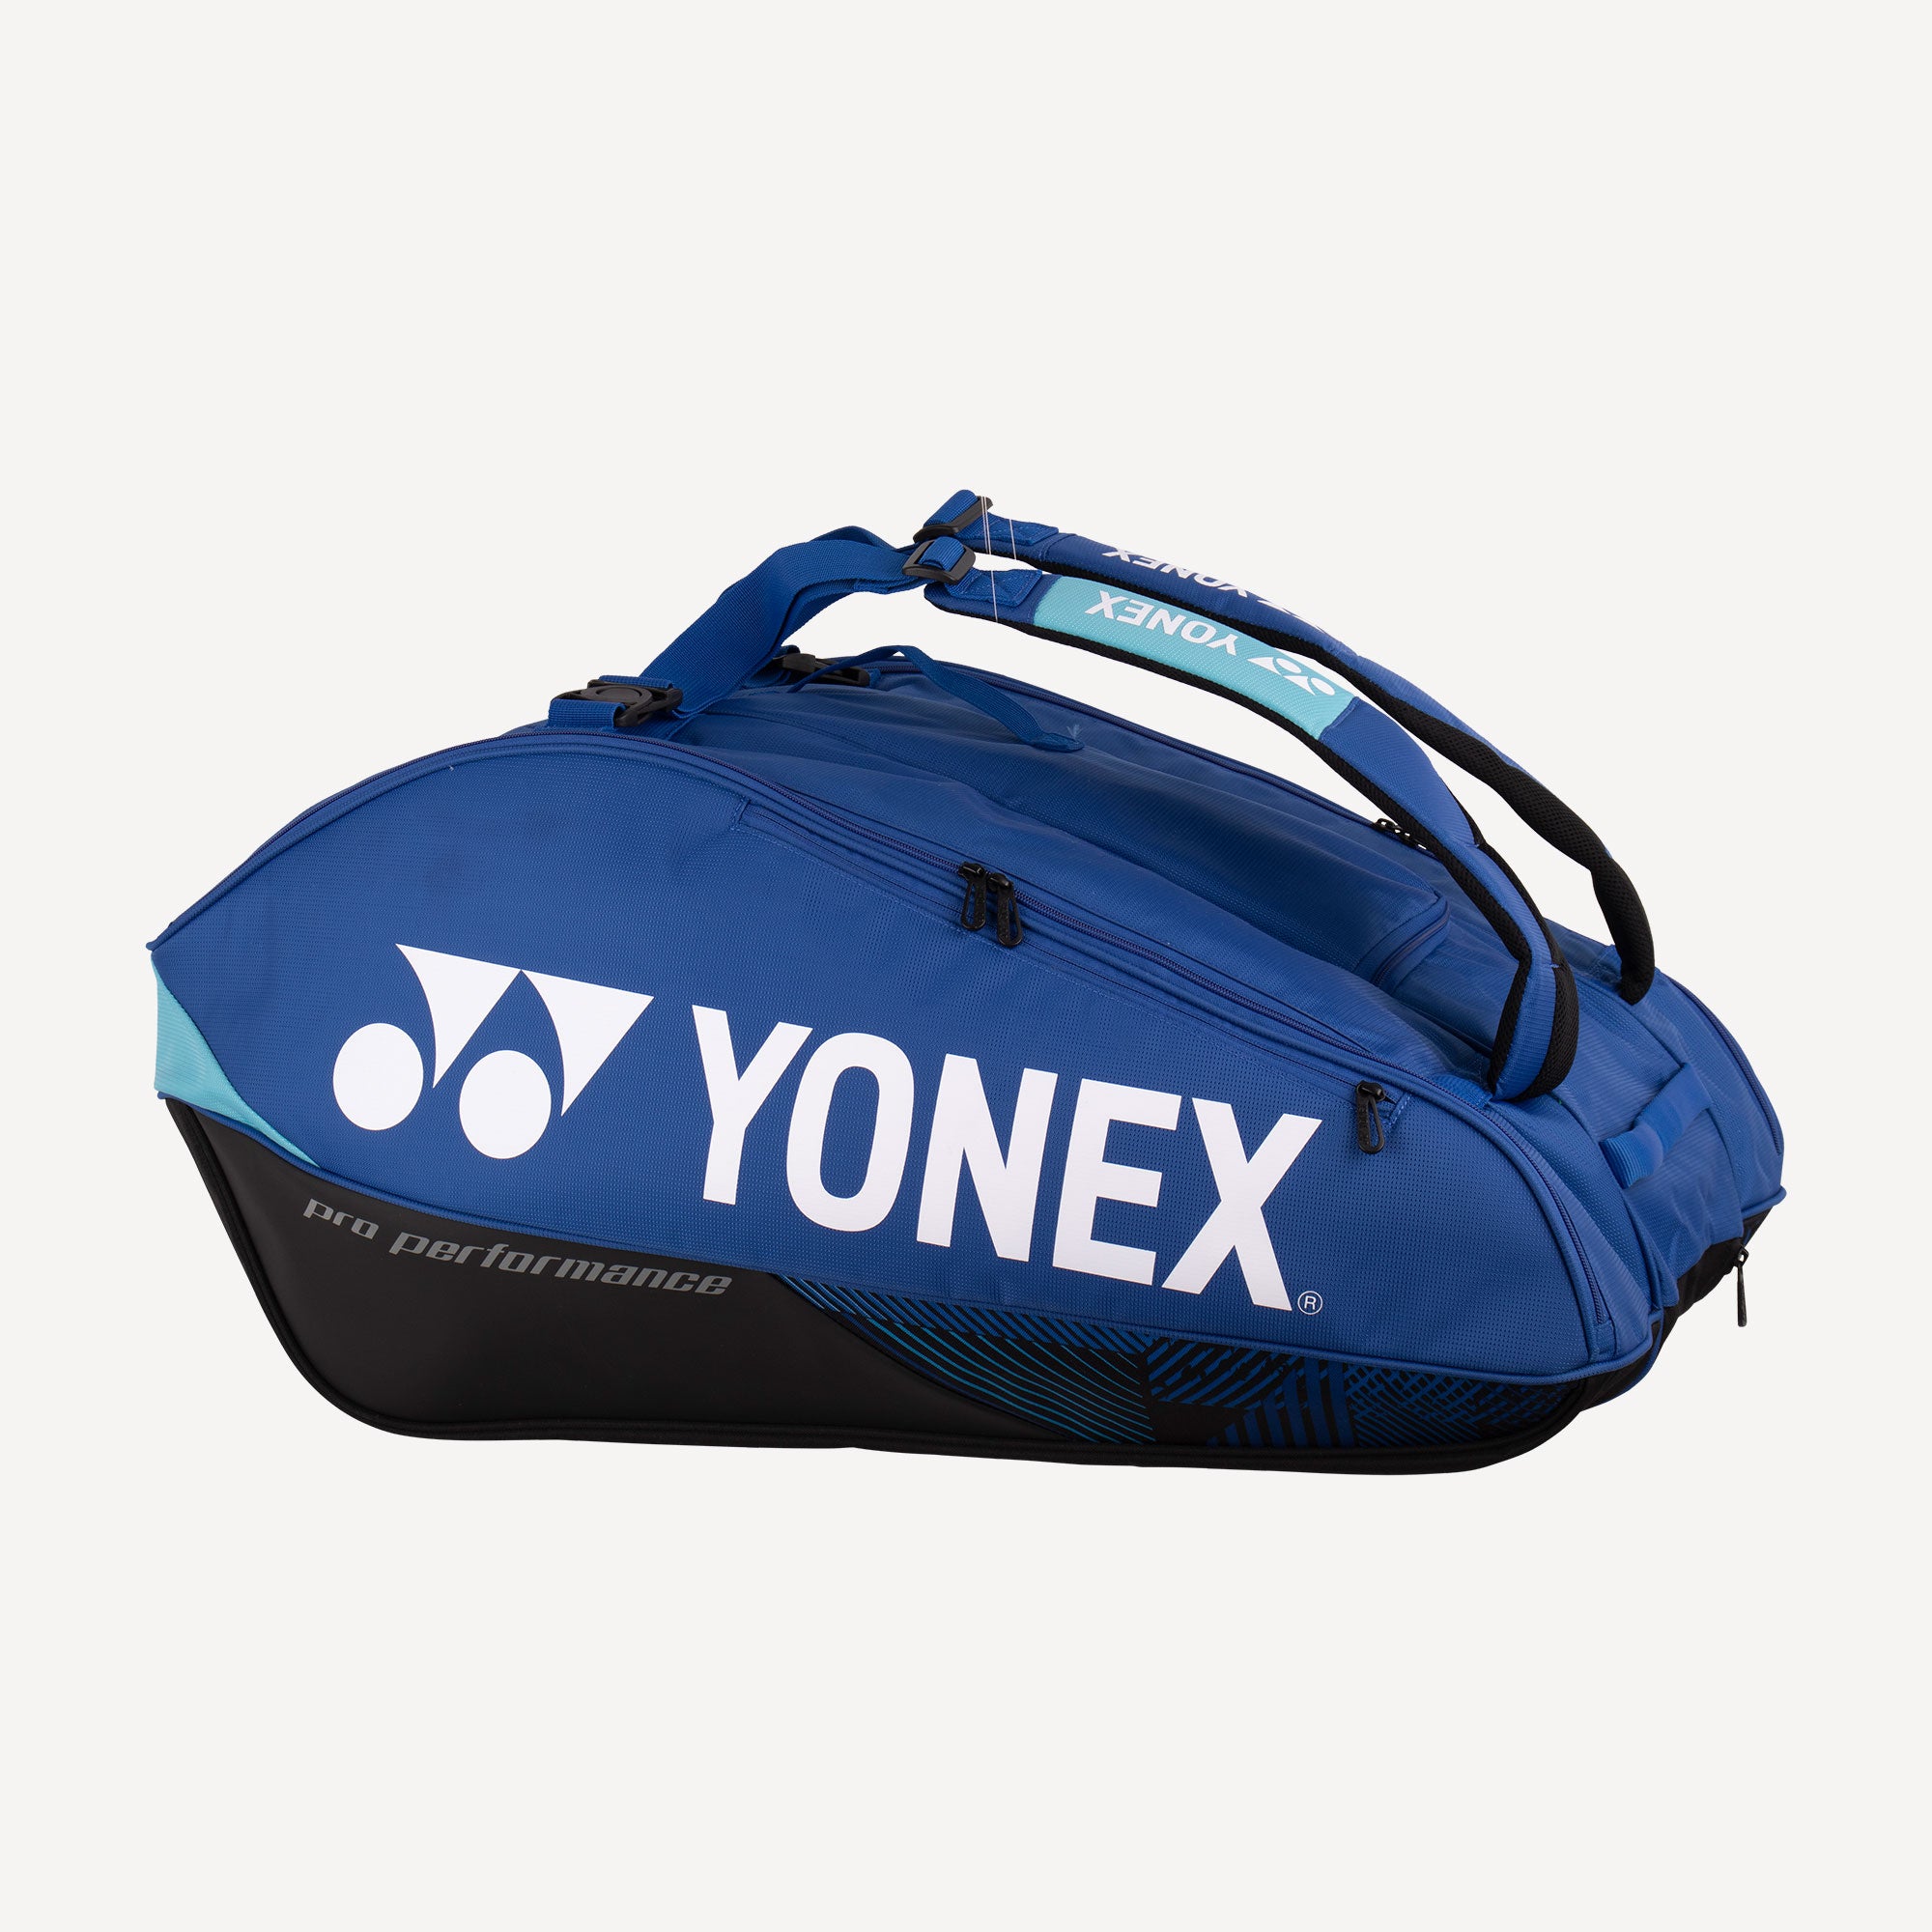 Yonex Pro 12 Racket Tennis Bag - Blue (2)